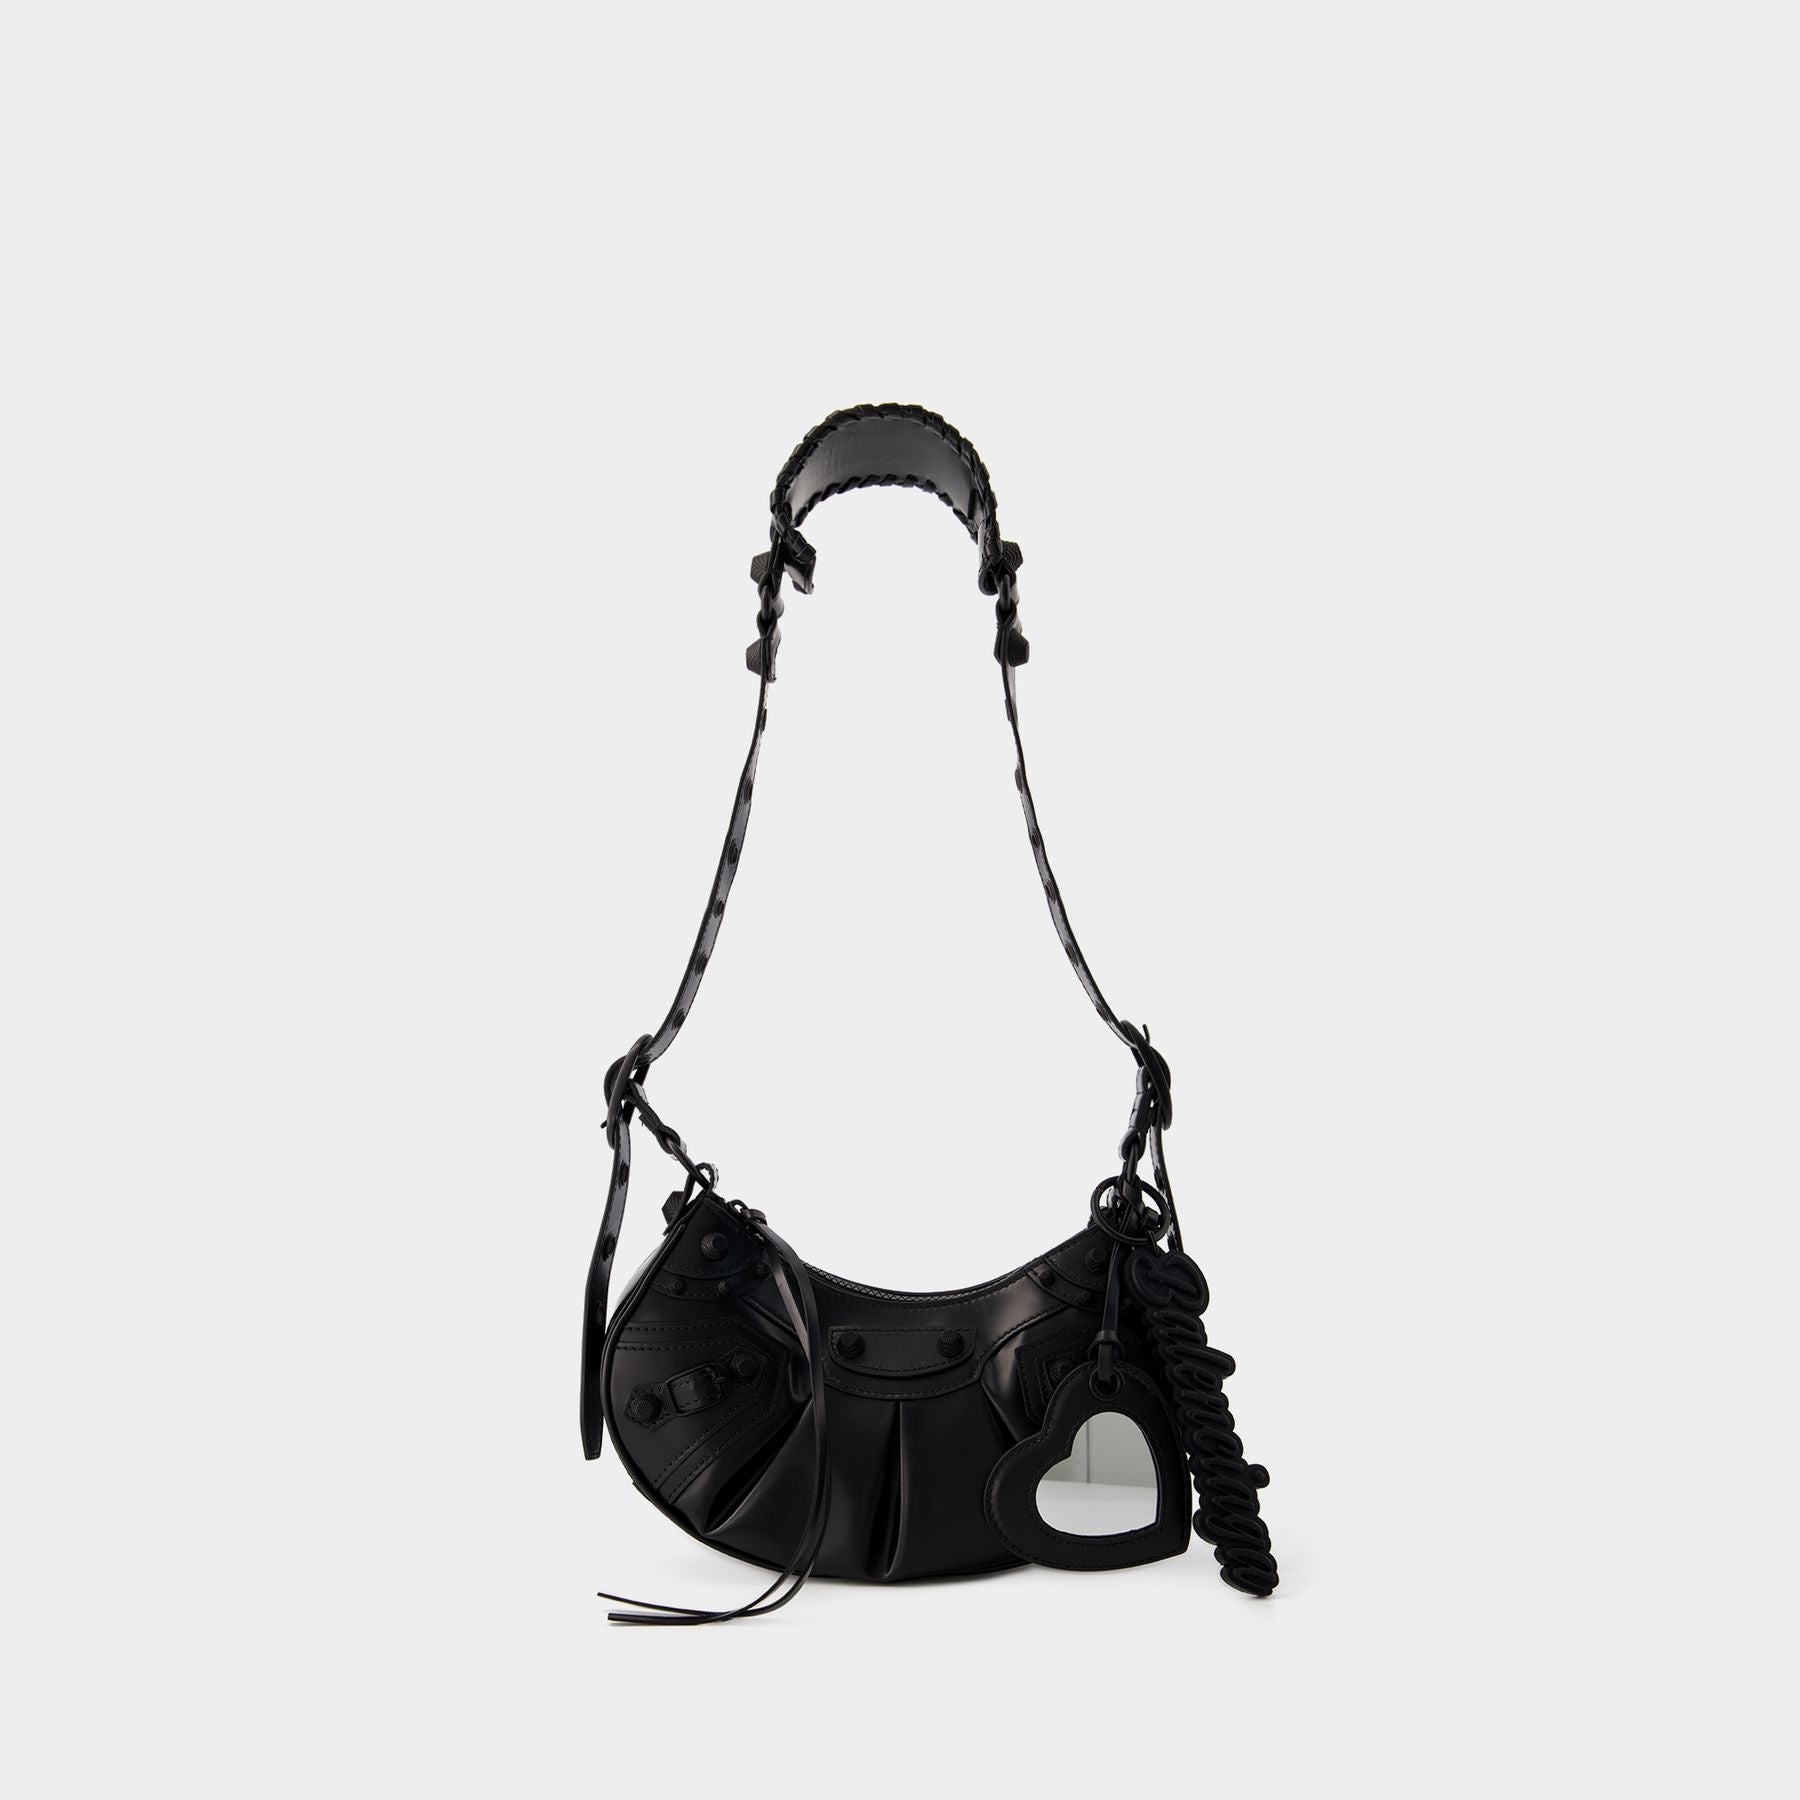 Balenciaga Everyday Strap Crossbody Unisex, Women's Fashion, Bags